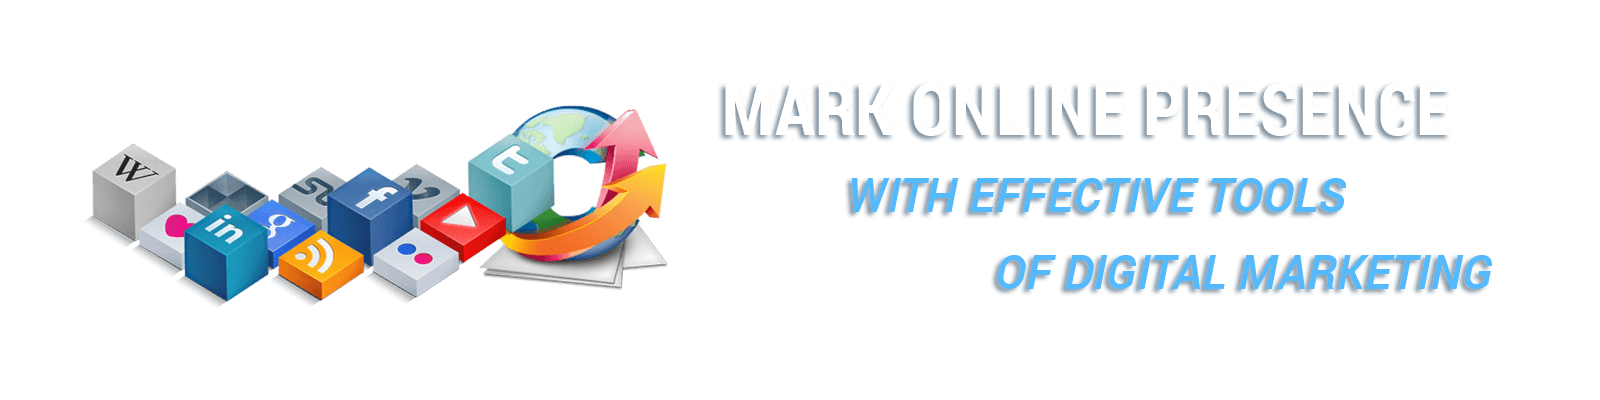 Mark online presence